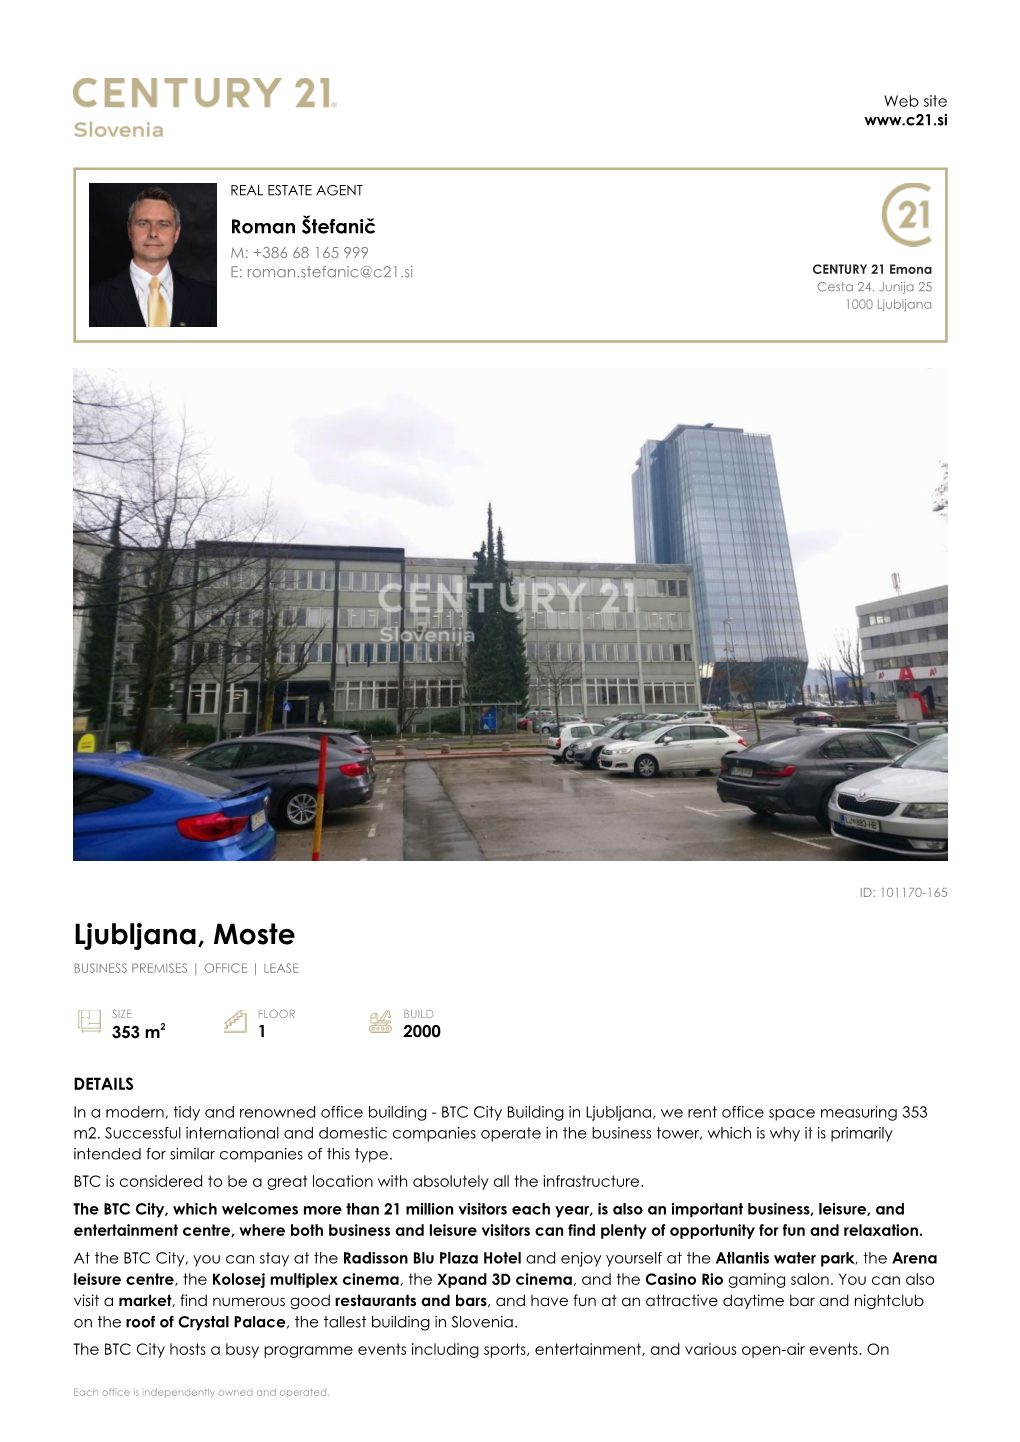 Ljubljana, Moste BUSINESS PREMISES | OFFICE | LEASE